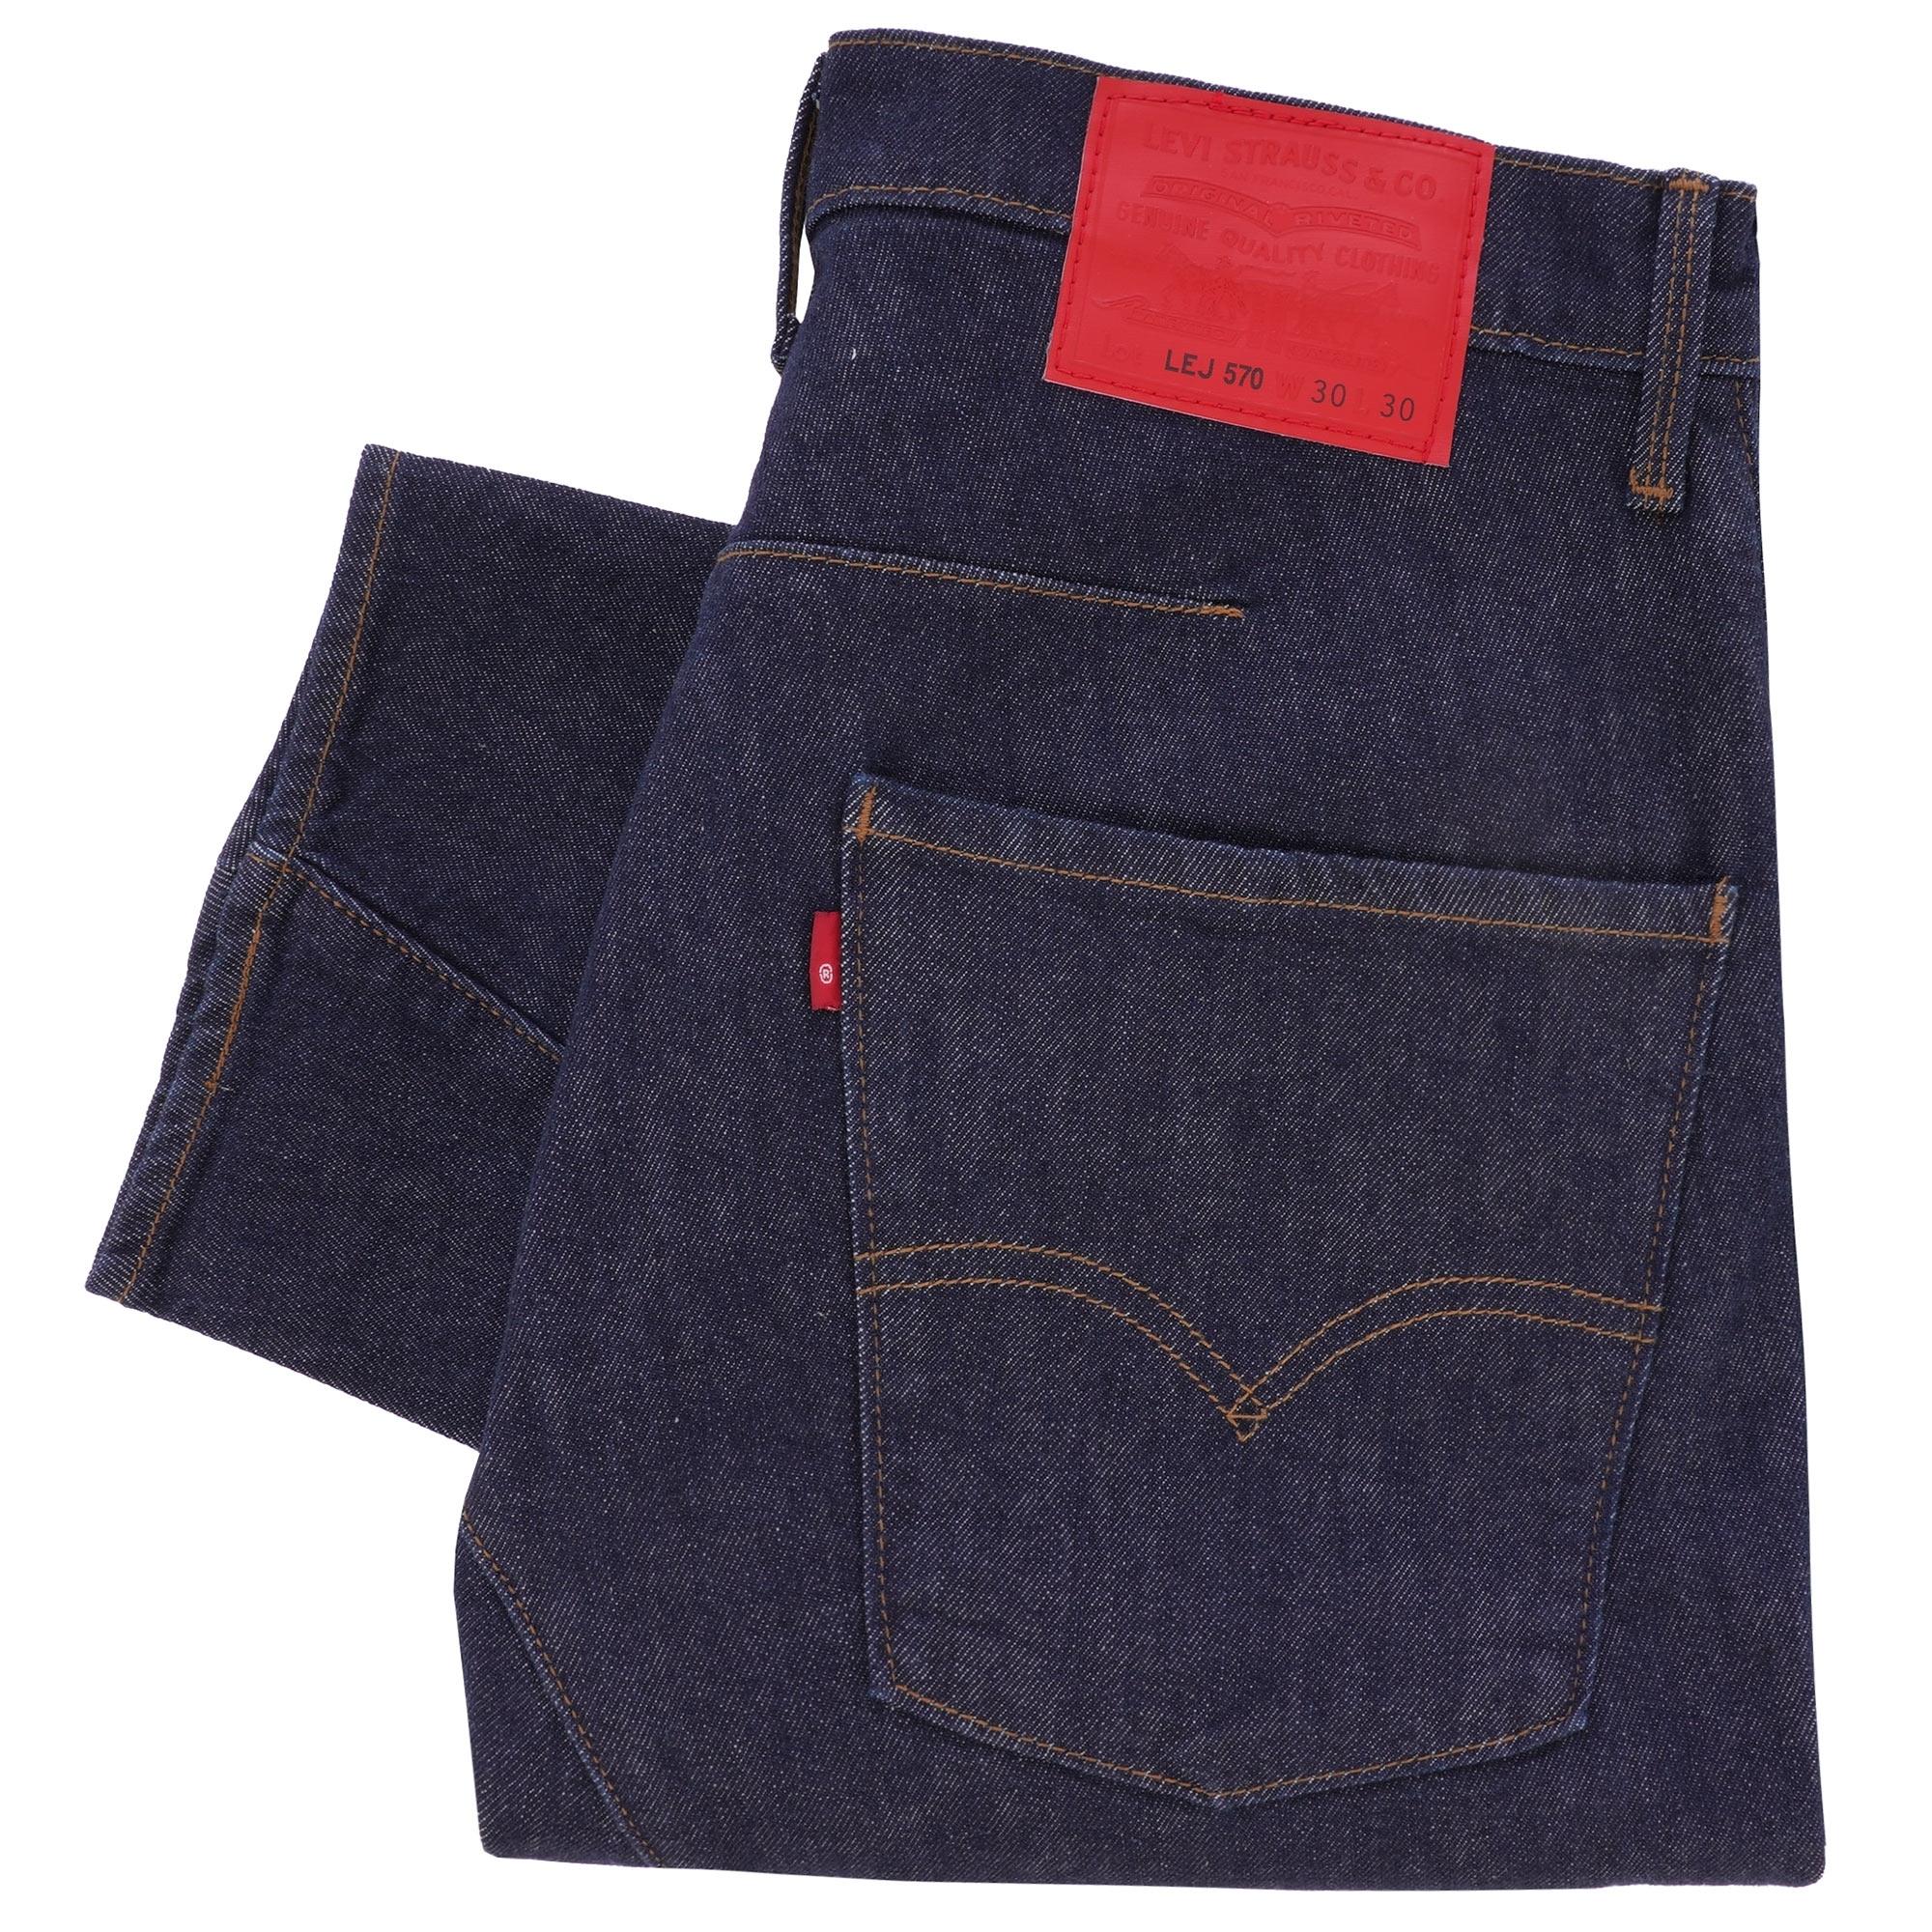 Engineered Jeans Levis Austria, SAVE 46% - aveclumiere.com